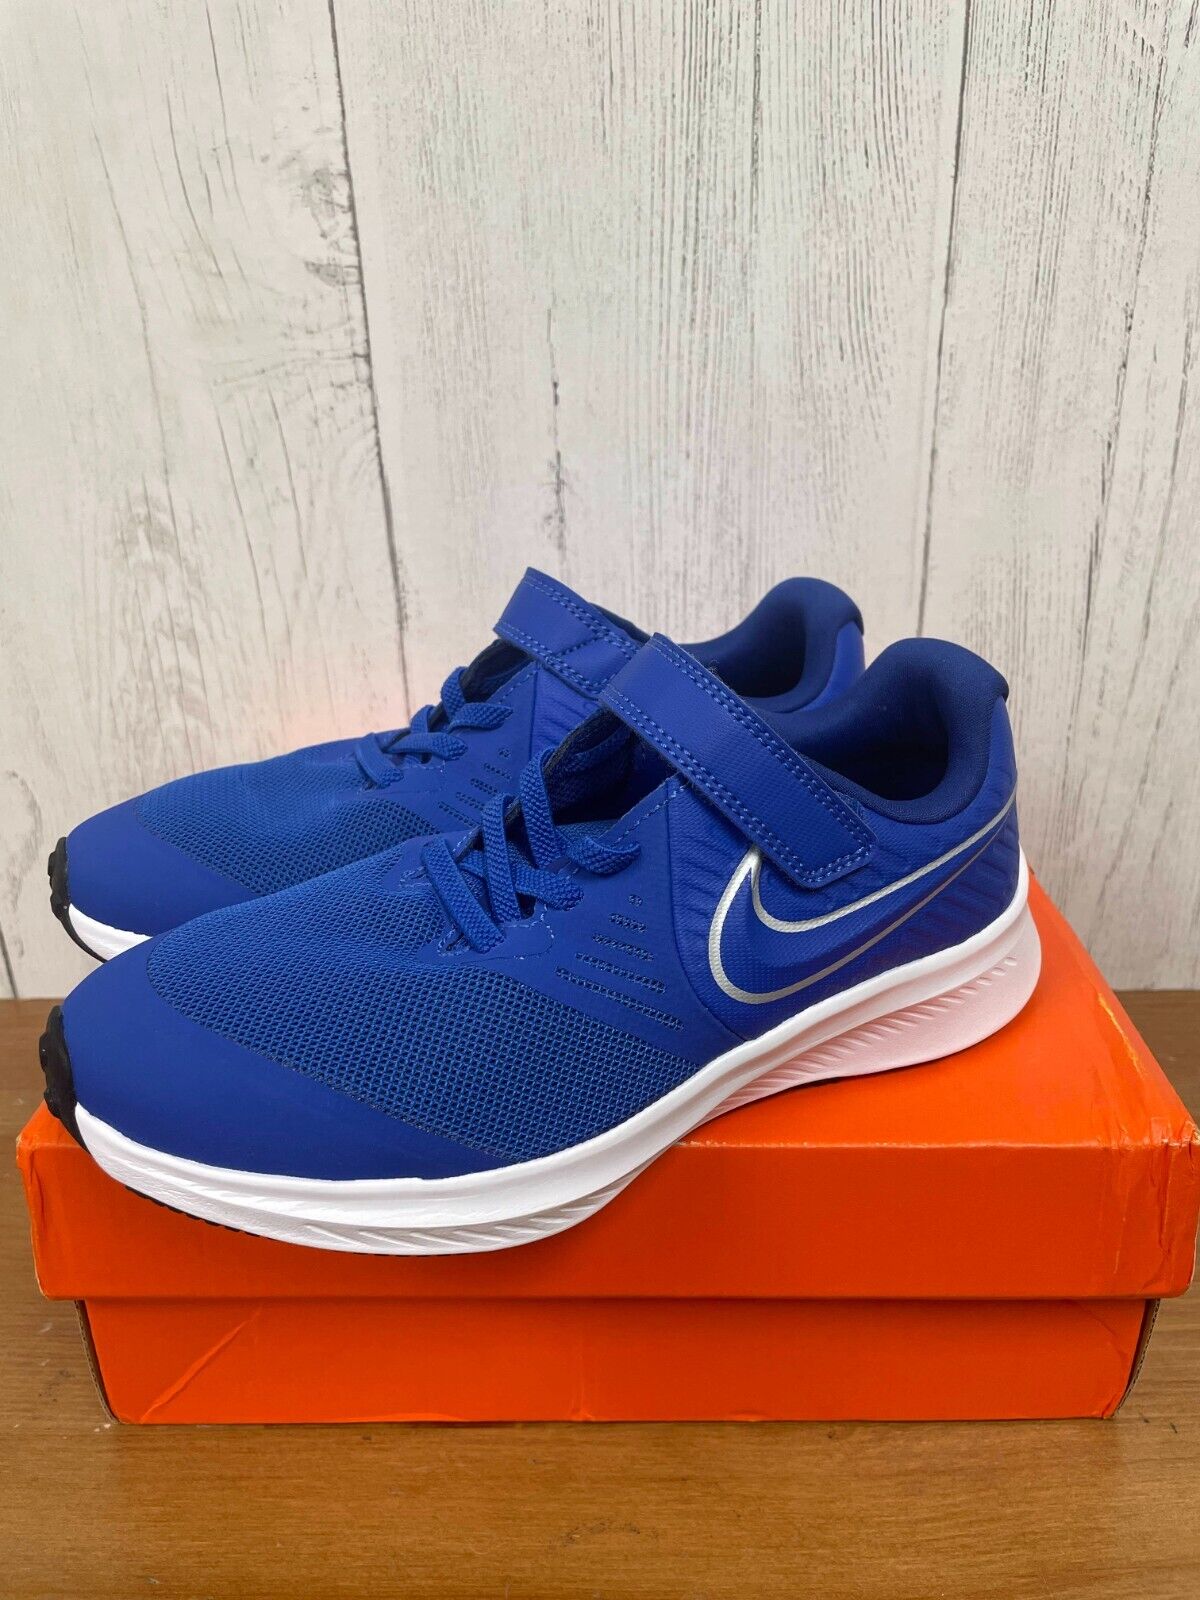 Nike Star Runner 2 Unisex Blue/White Athletic Shoes Size 2Y | eBay